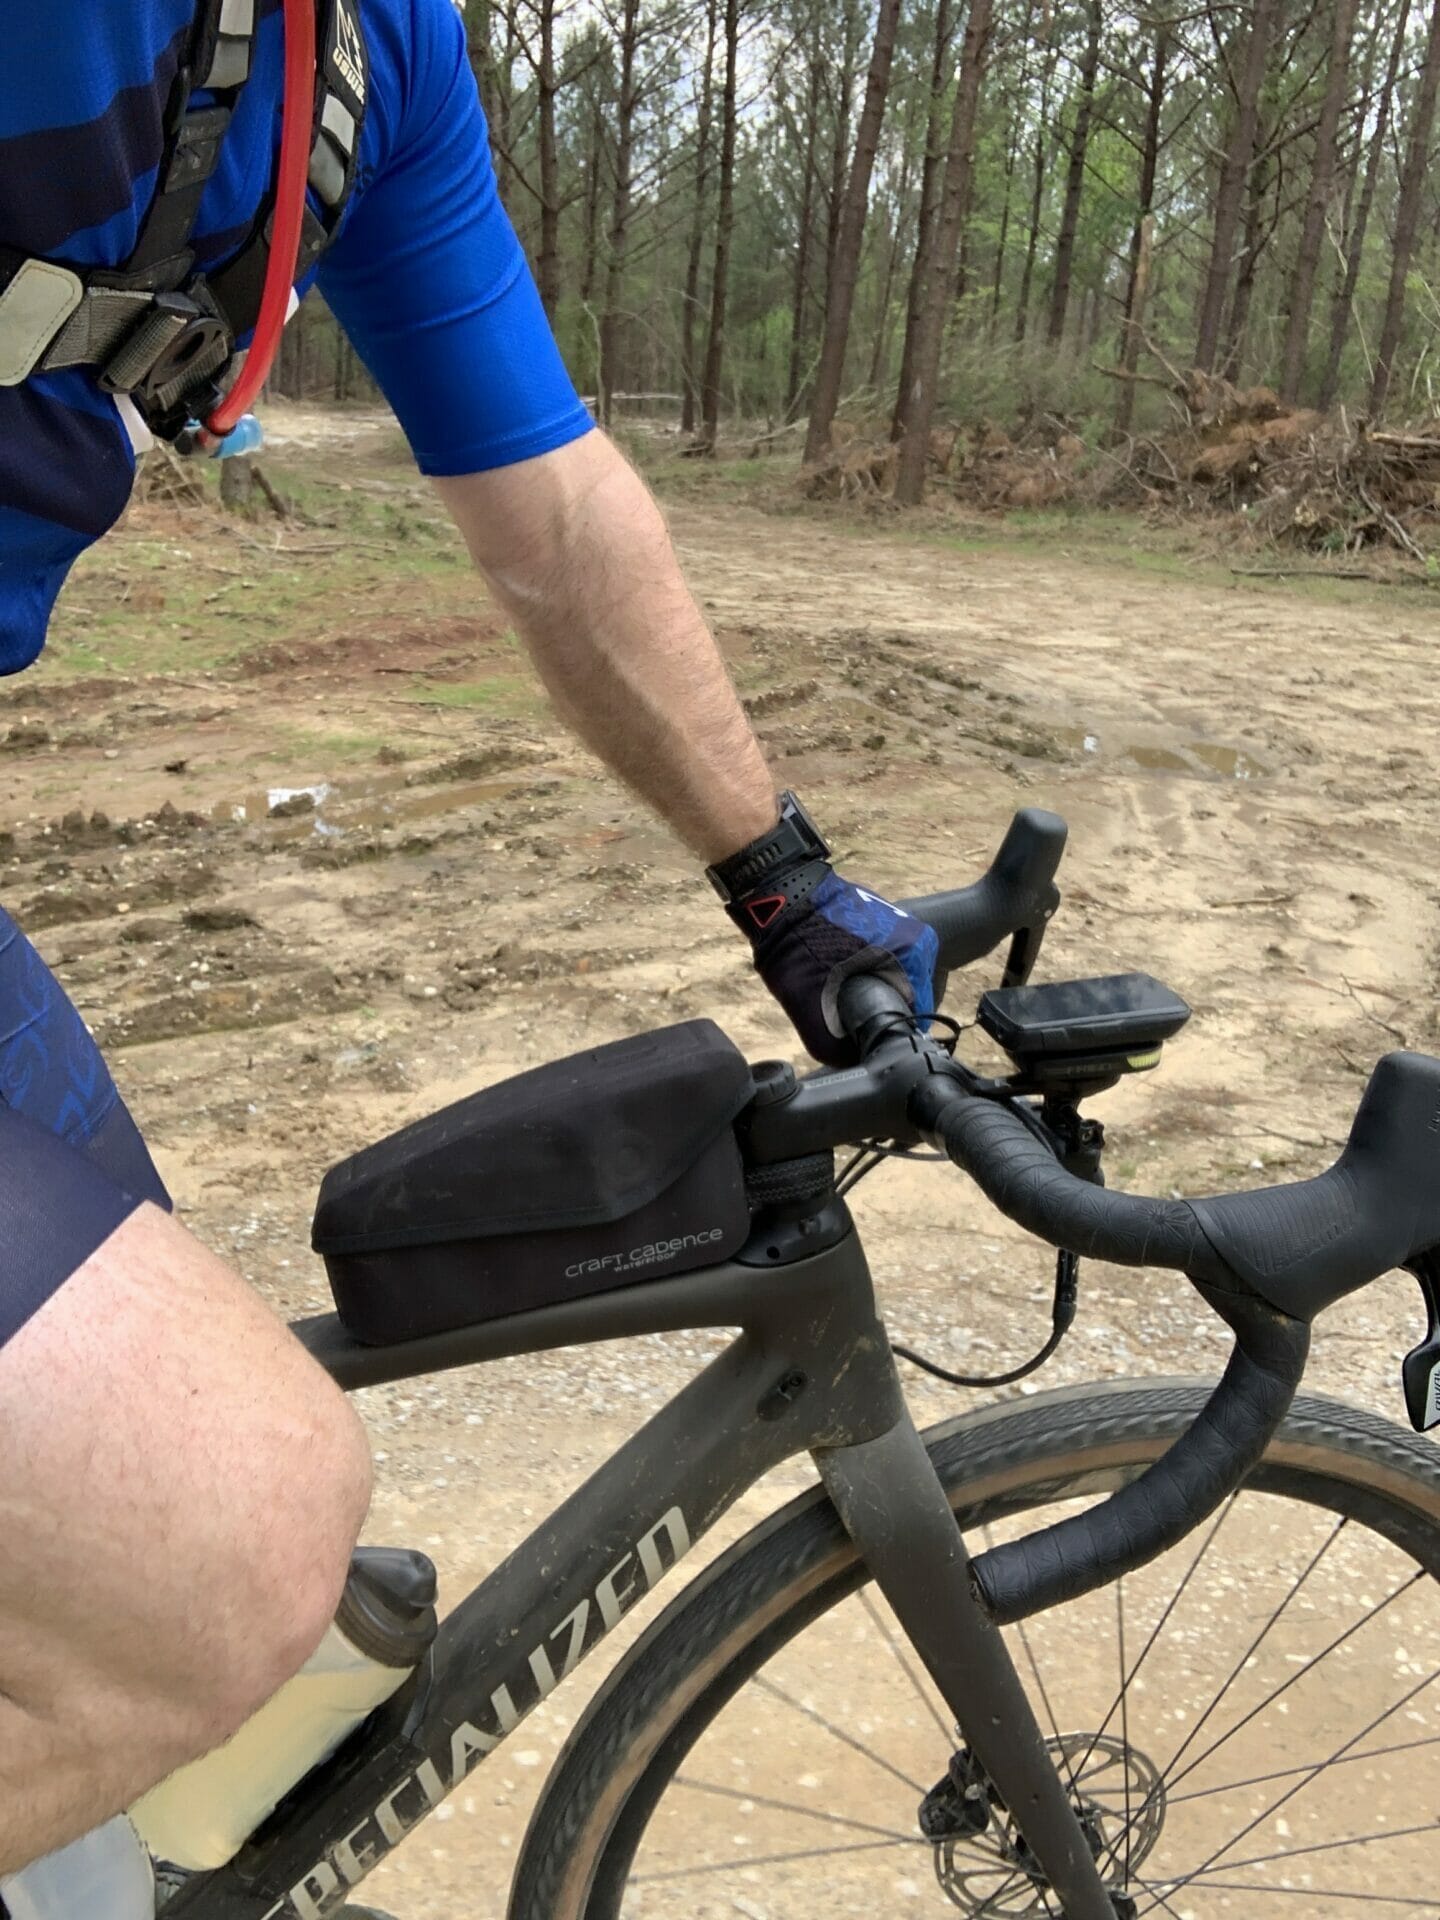 Riding gravel bike with Craft Cadence bolt on top tube bag